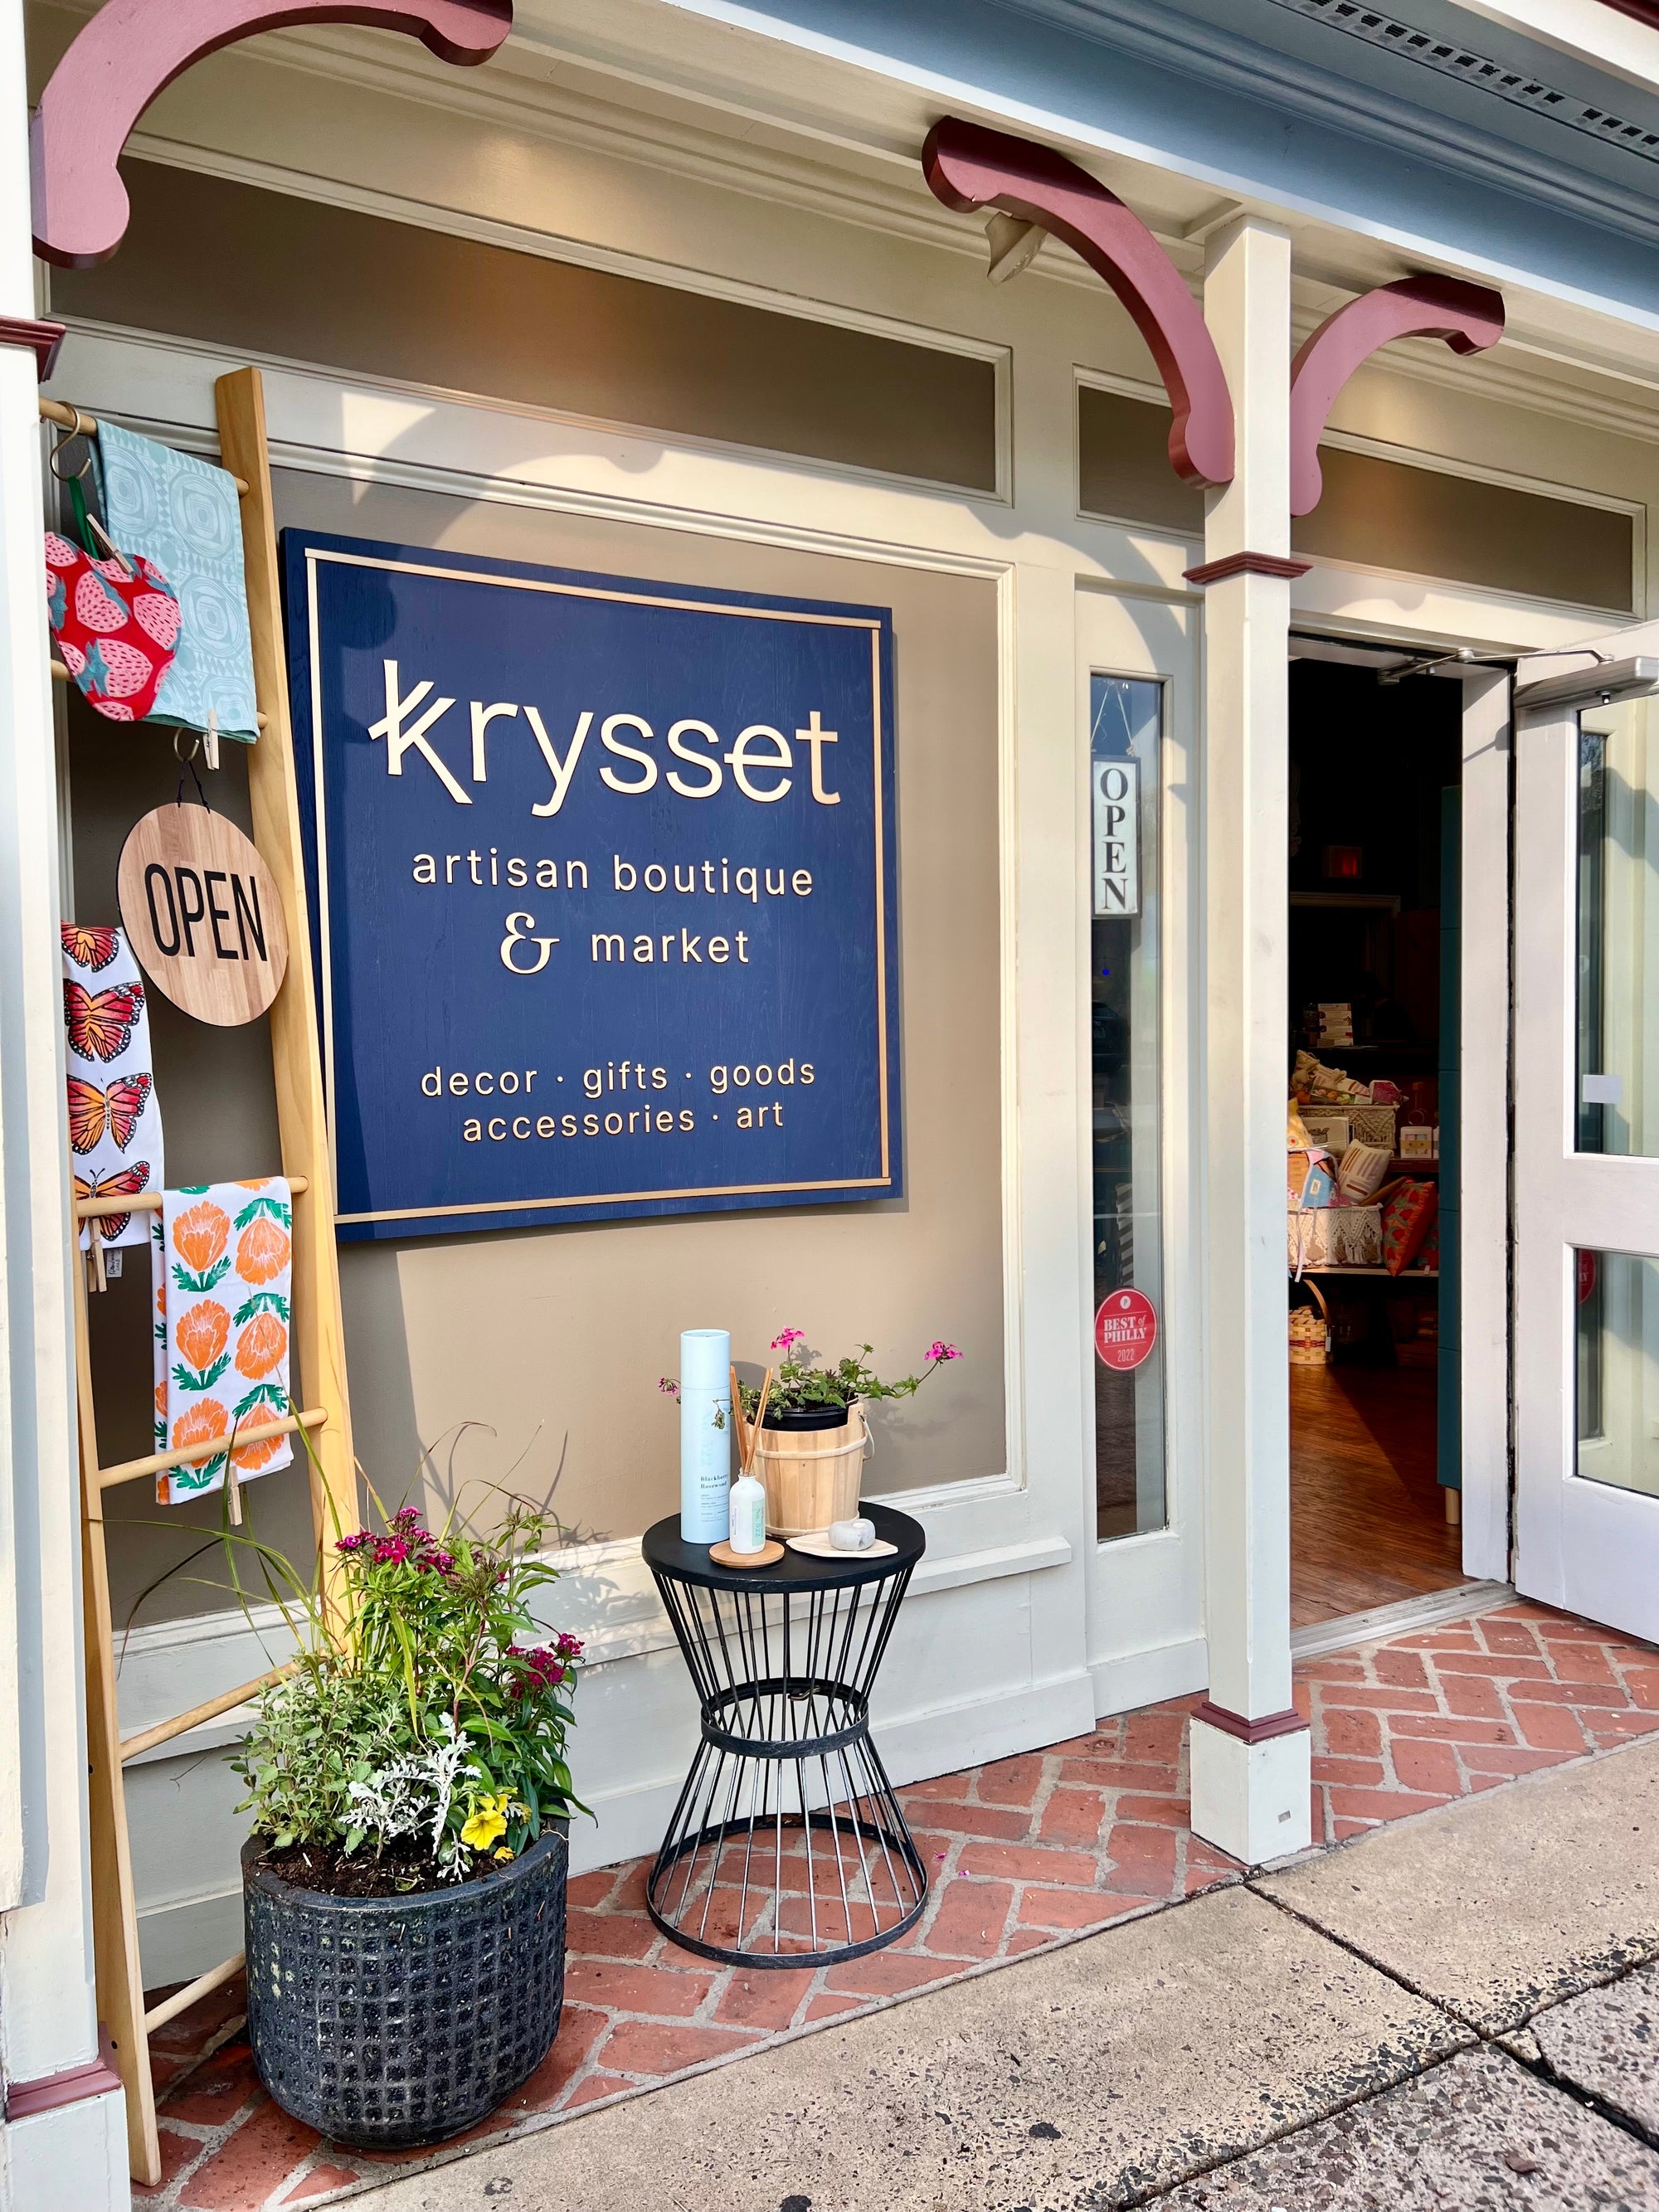 krysset artisan boutique and market at 6 south main street in yardley bucks county pennsylvania